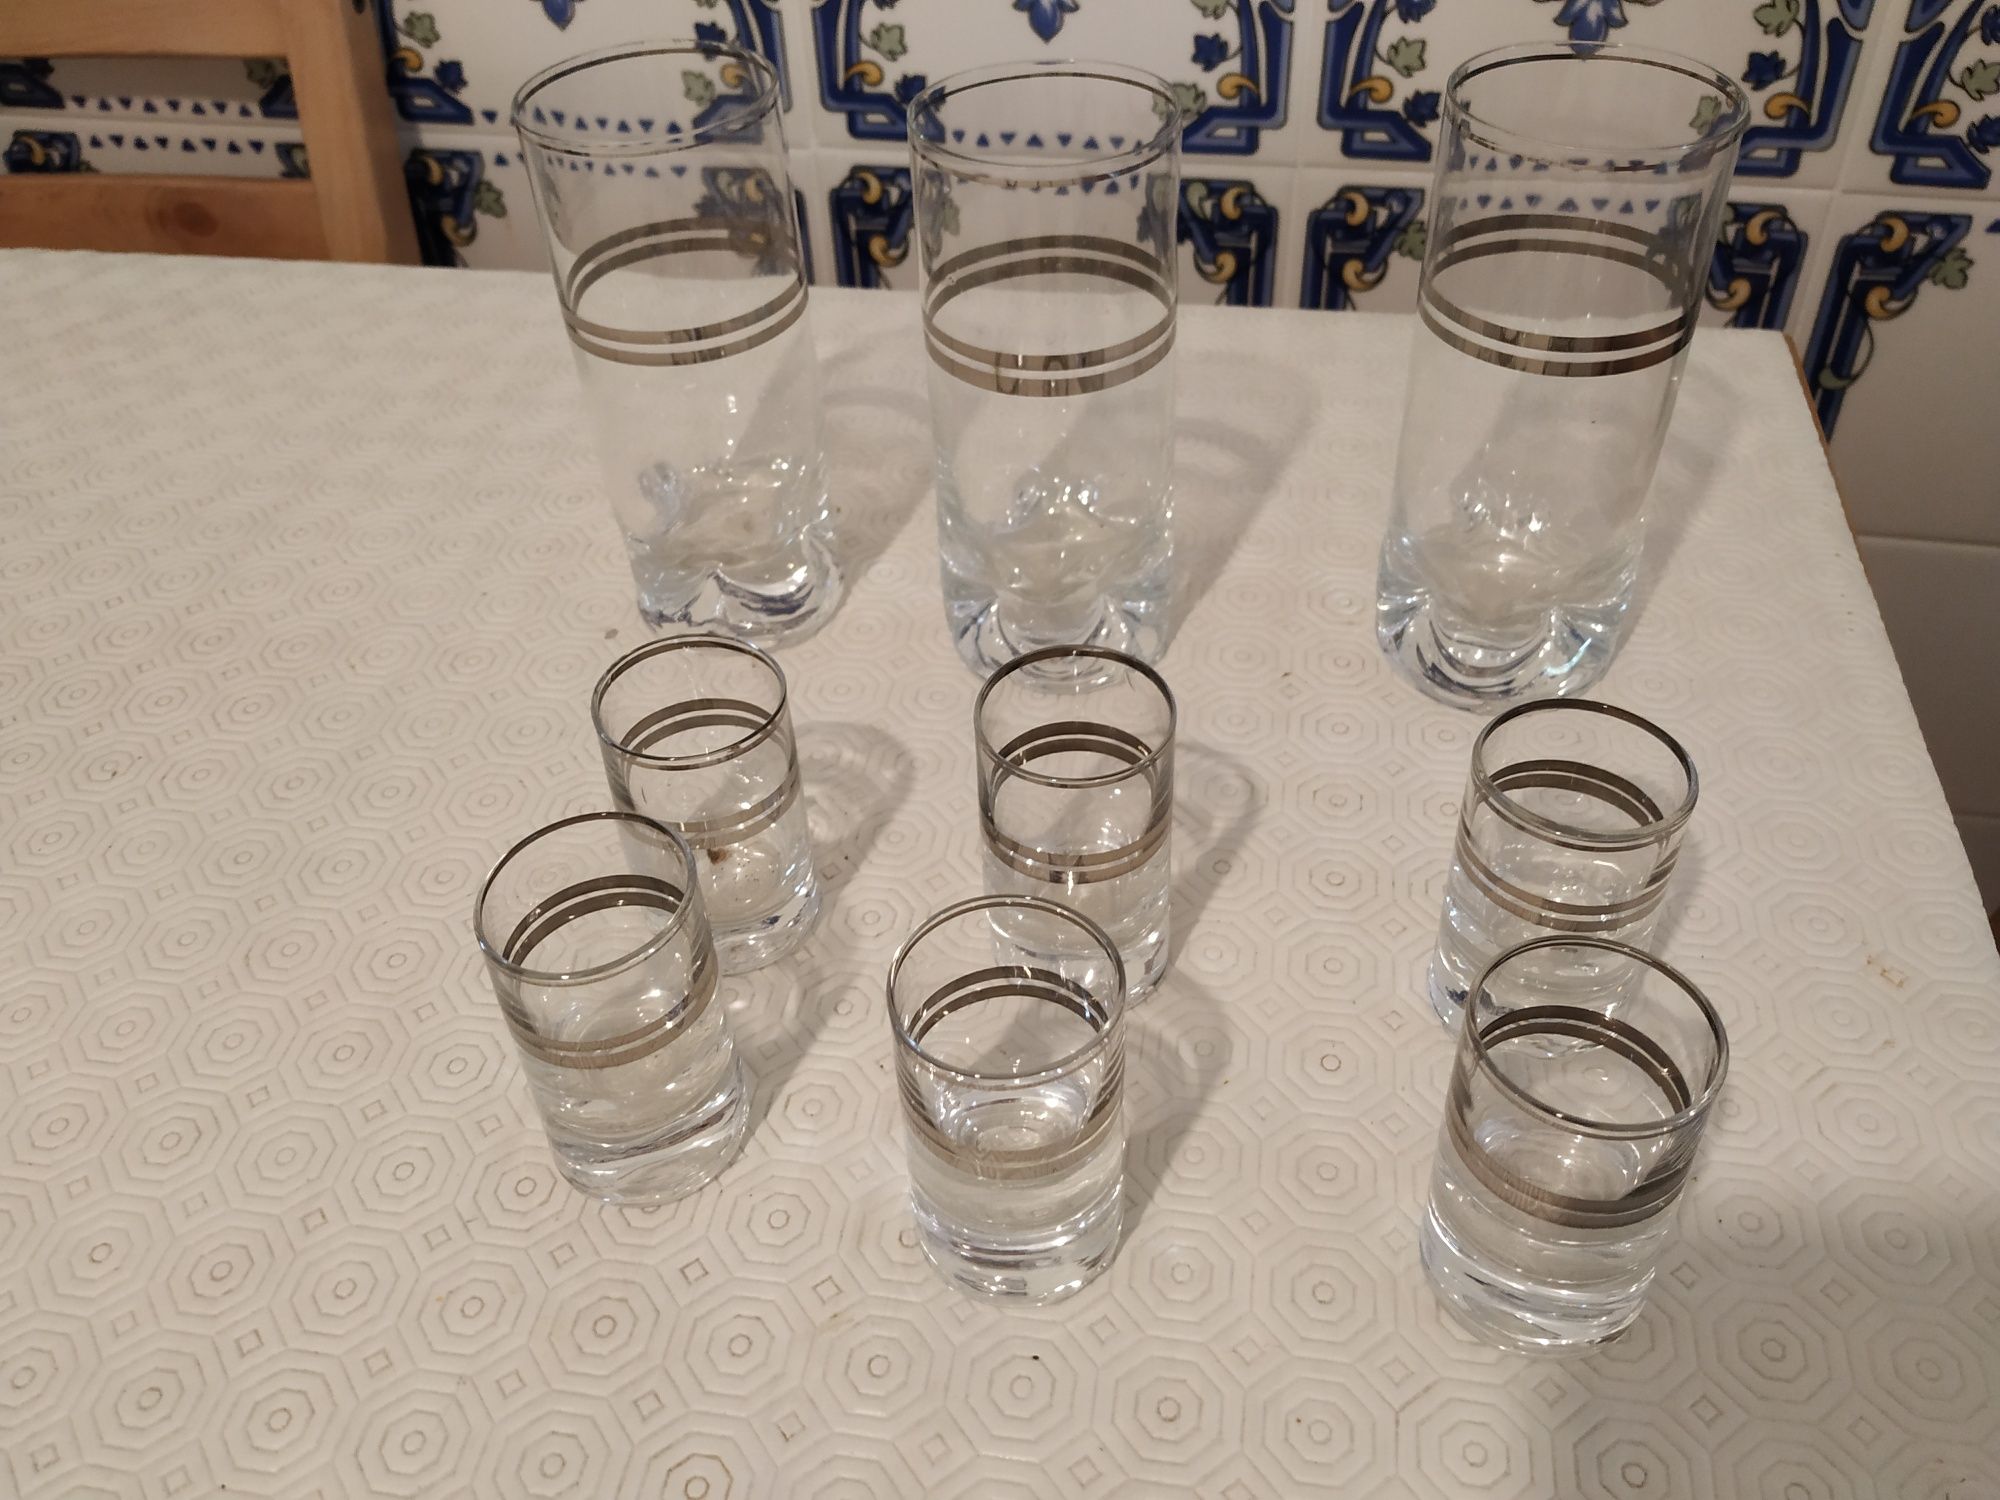 Serviço de copos com jarra